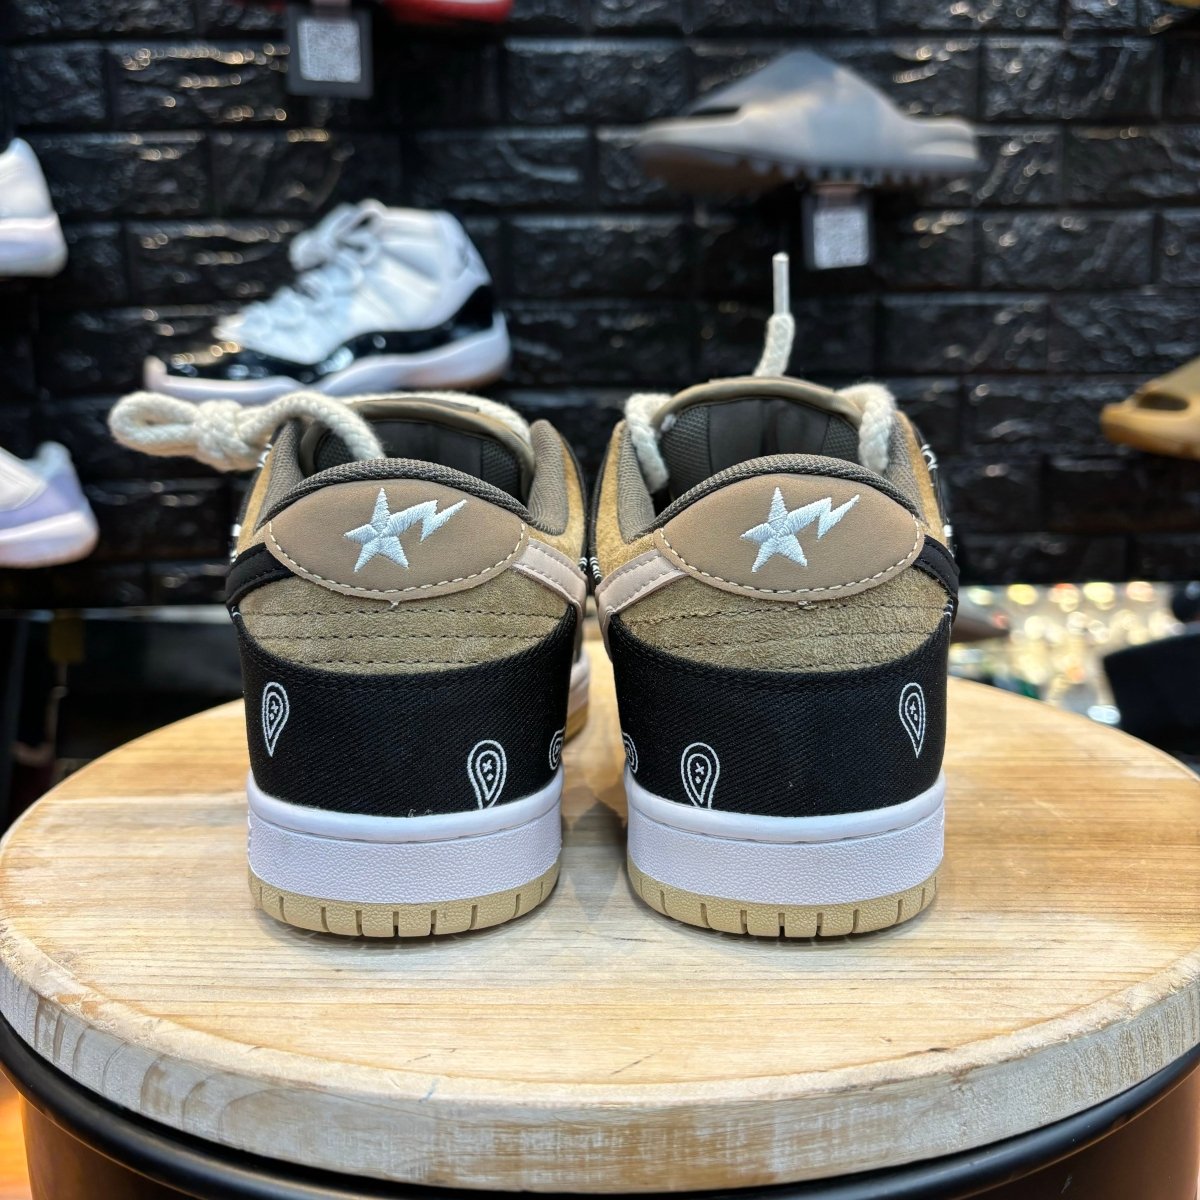 Indigo Studios Ape Paisley - Available Now - Low Sneaker - Jawns on Fire Sneakers & Streetwear